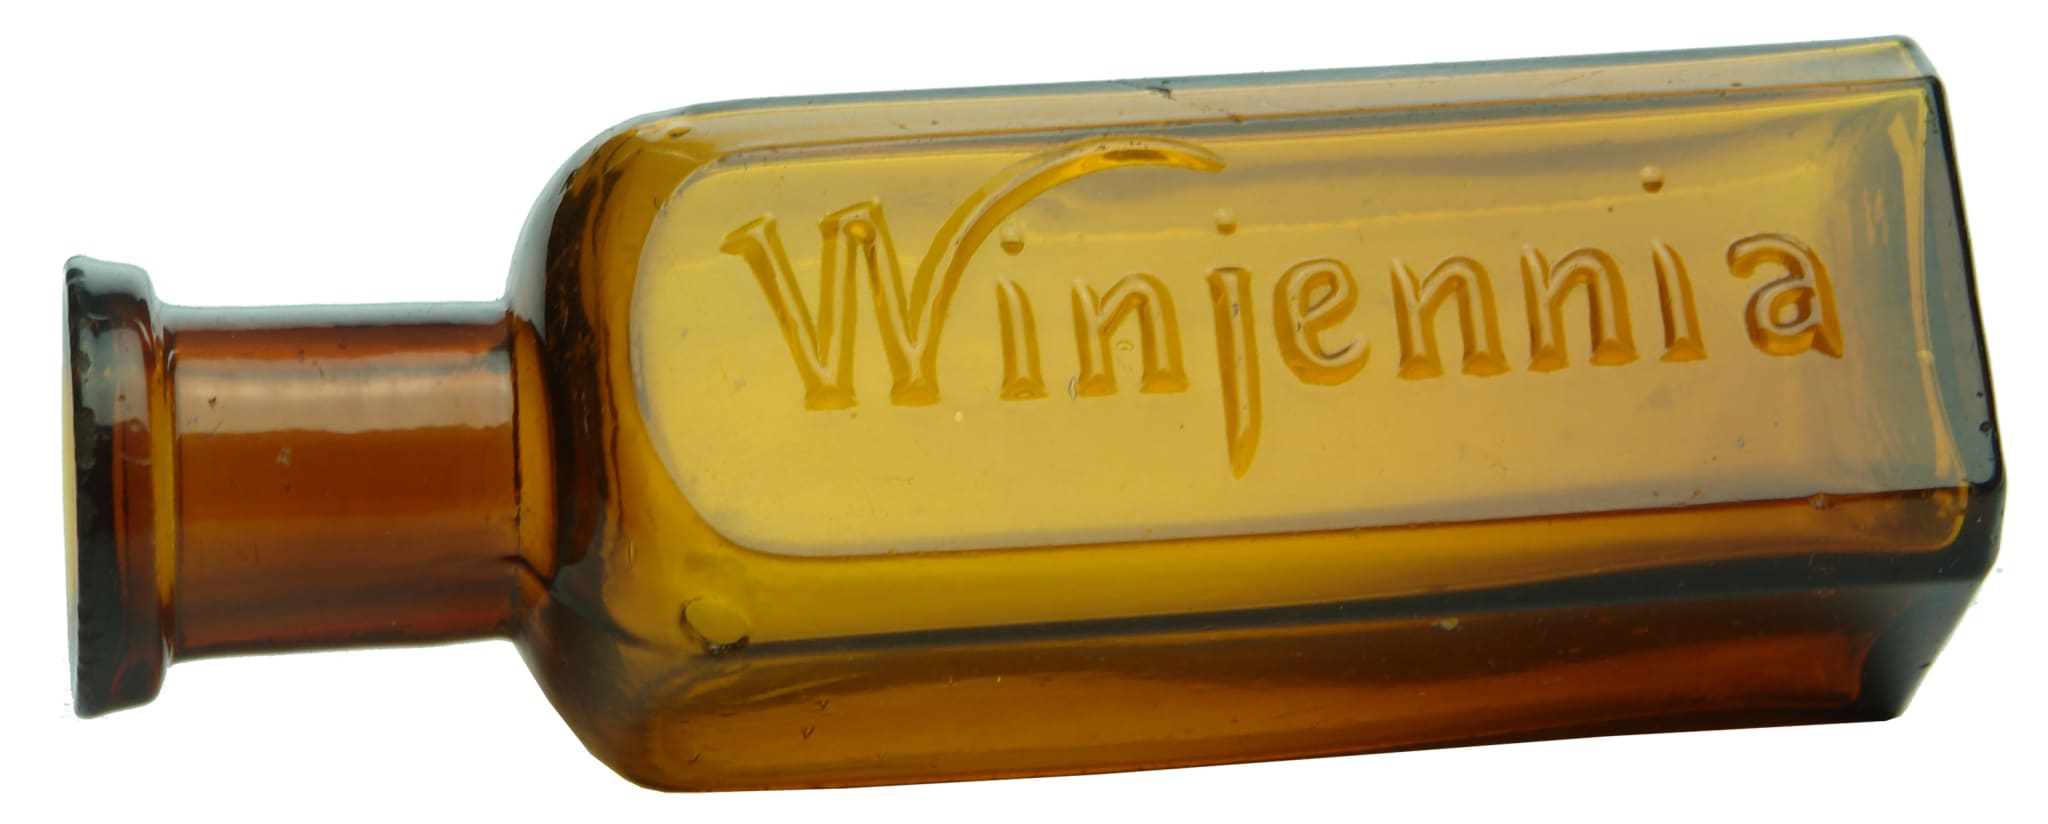 Winjennia Antique Amber Glass Medicine Bottle